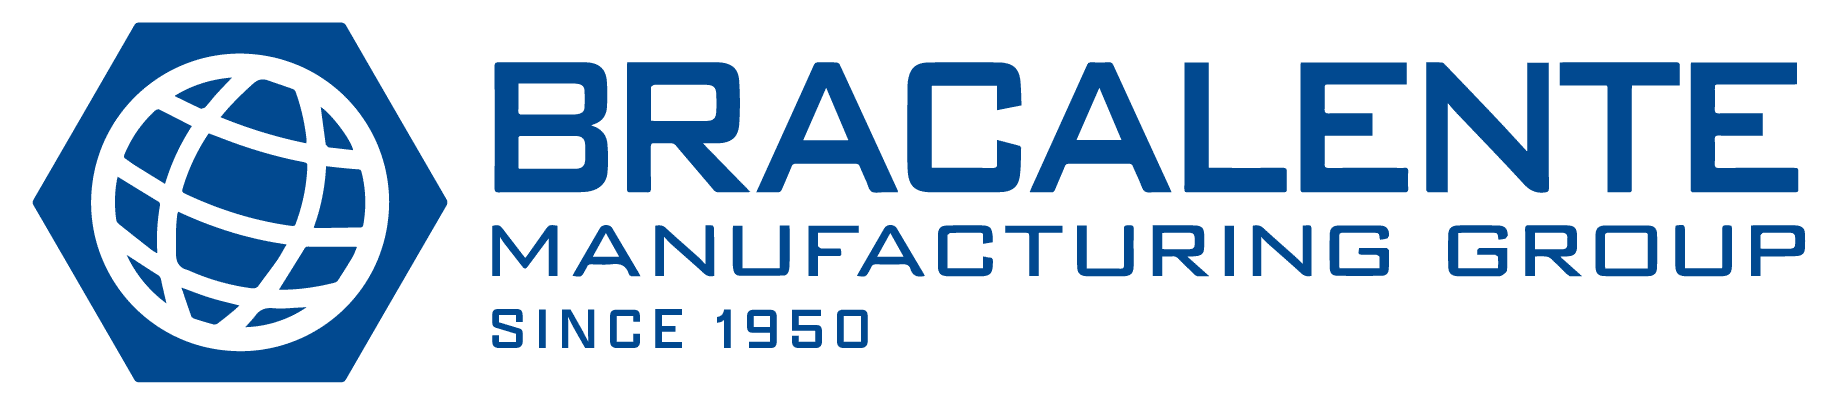 Bracalente Manufacturing Group nanomboka tamin'ny 1950